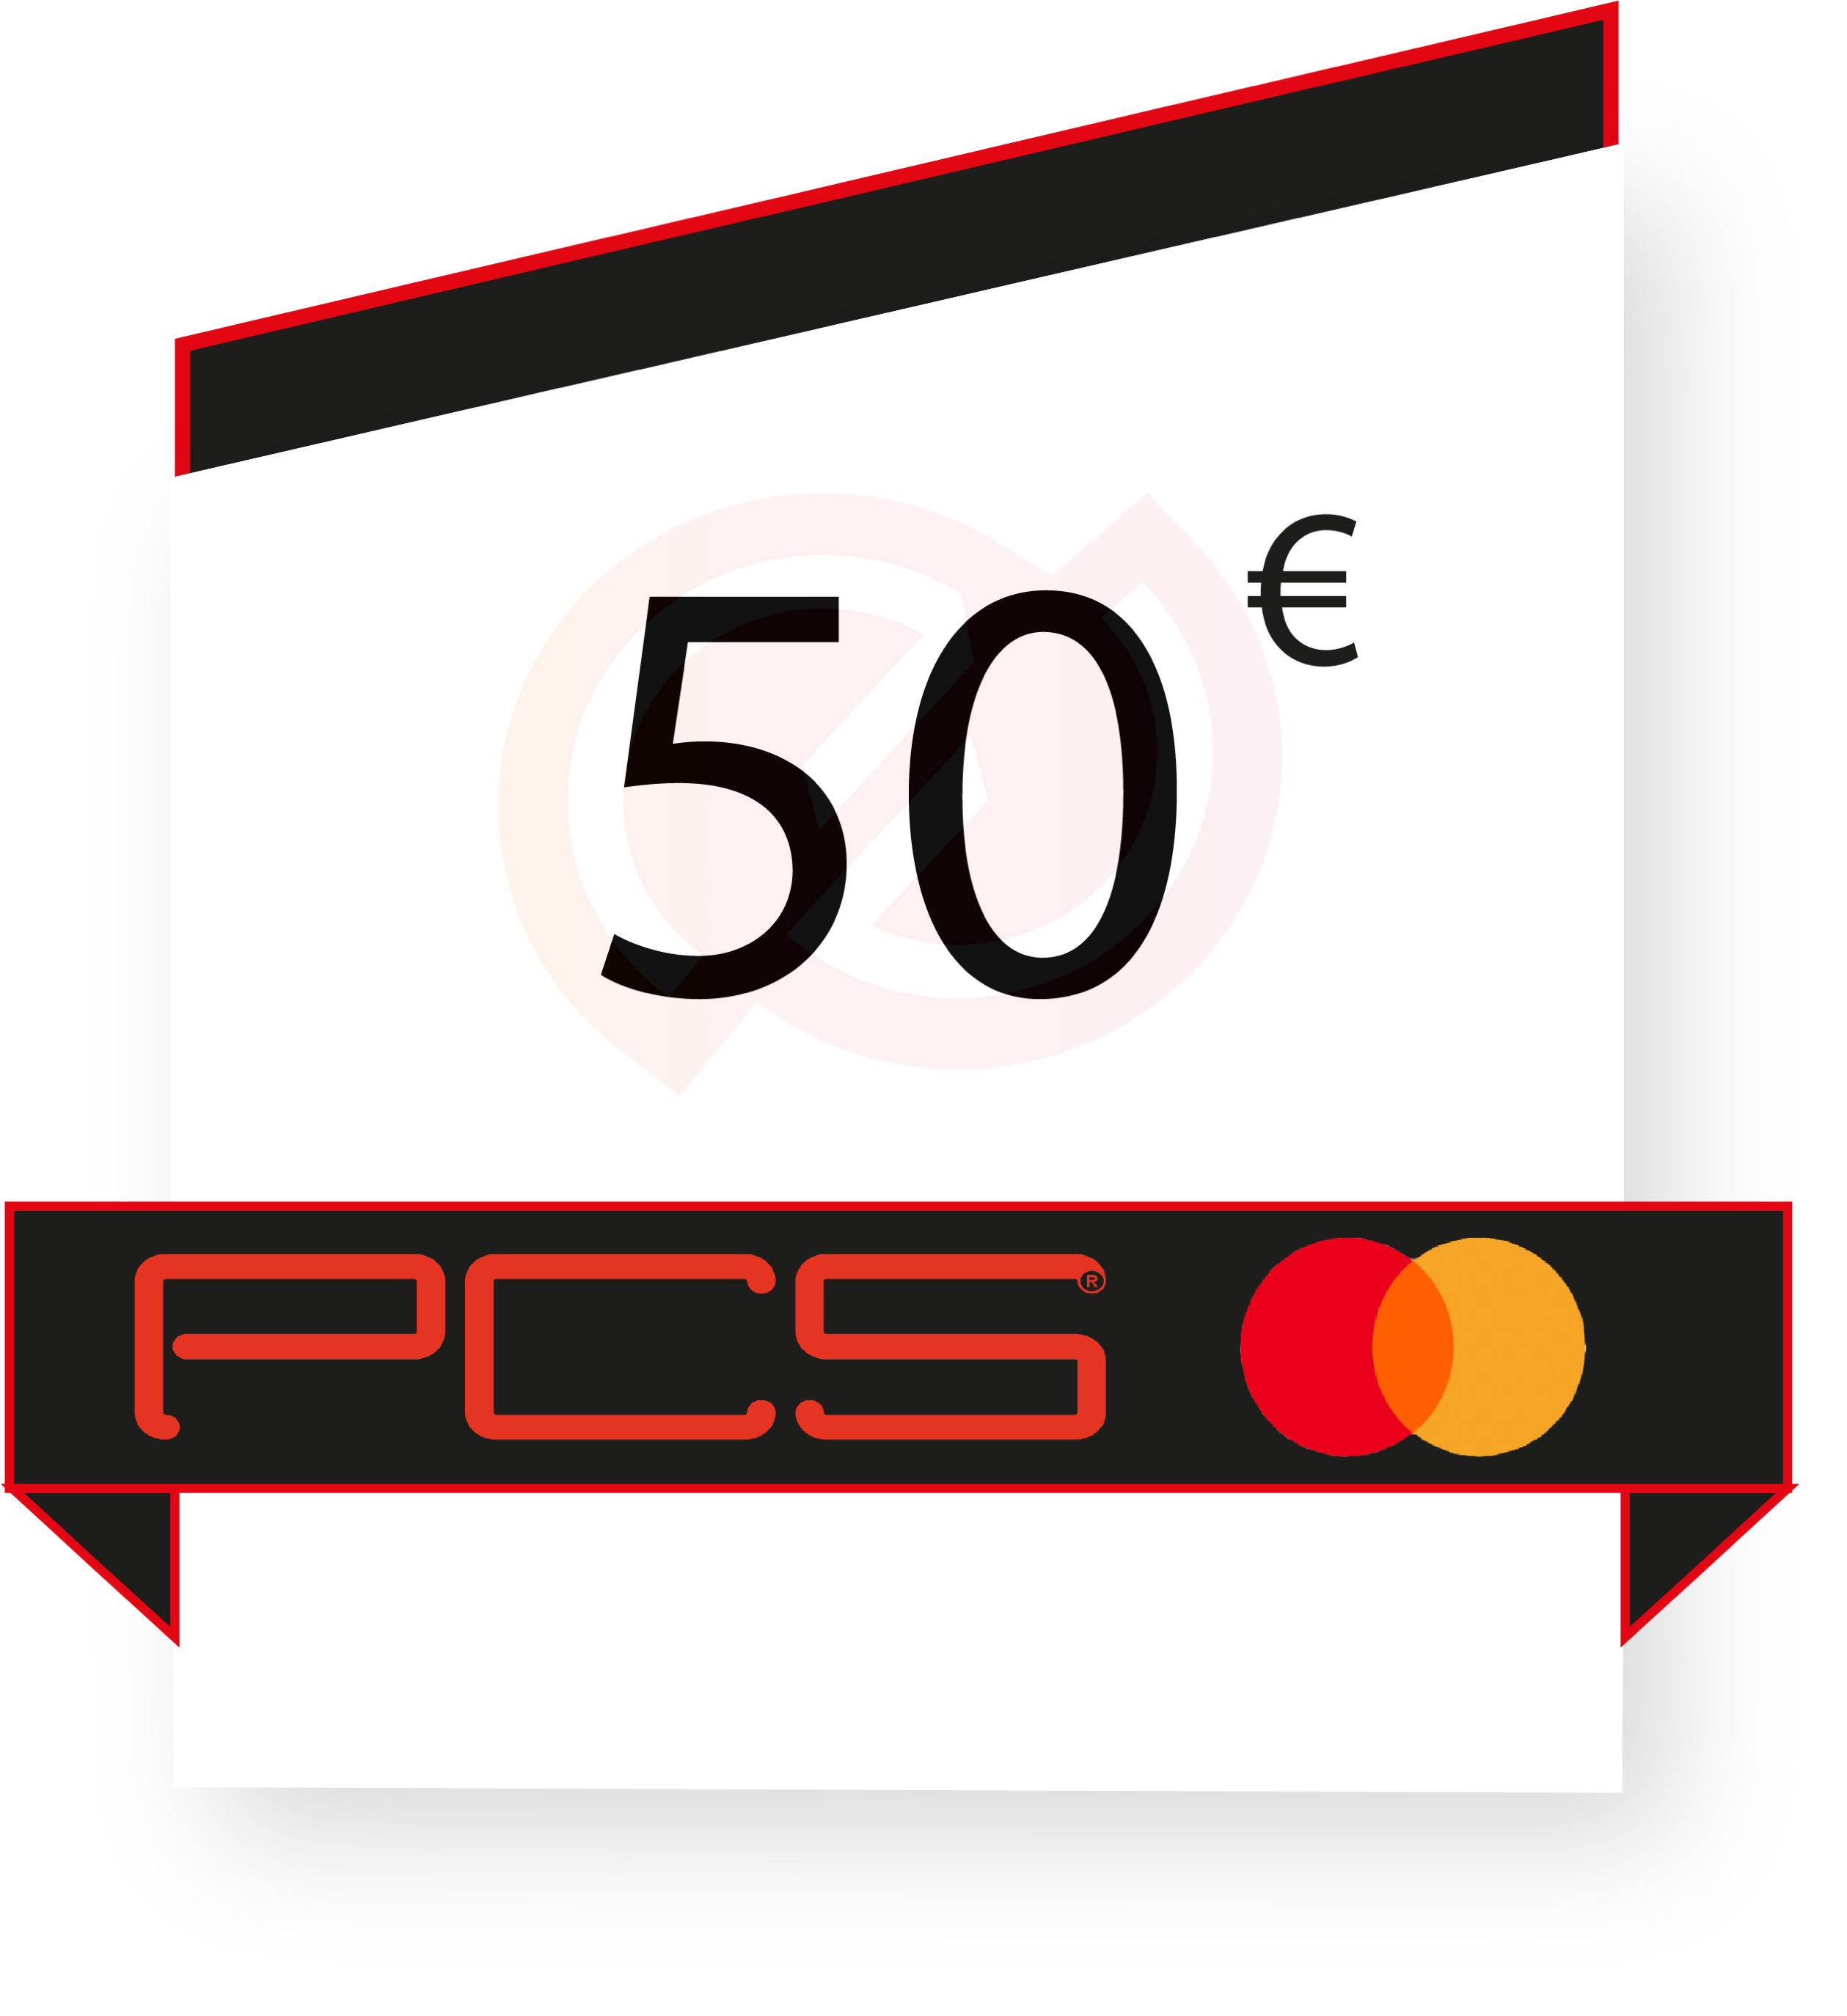 PCS 50€